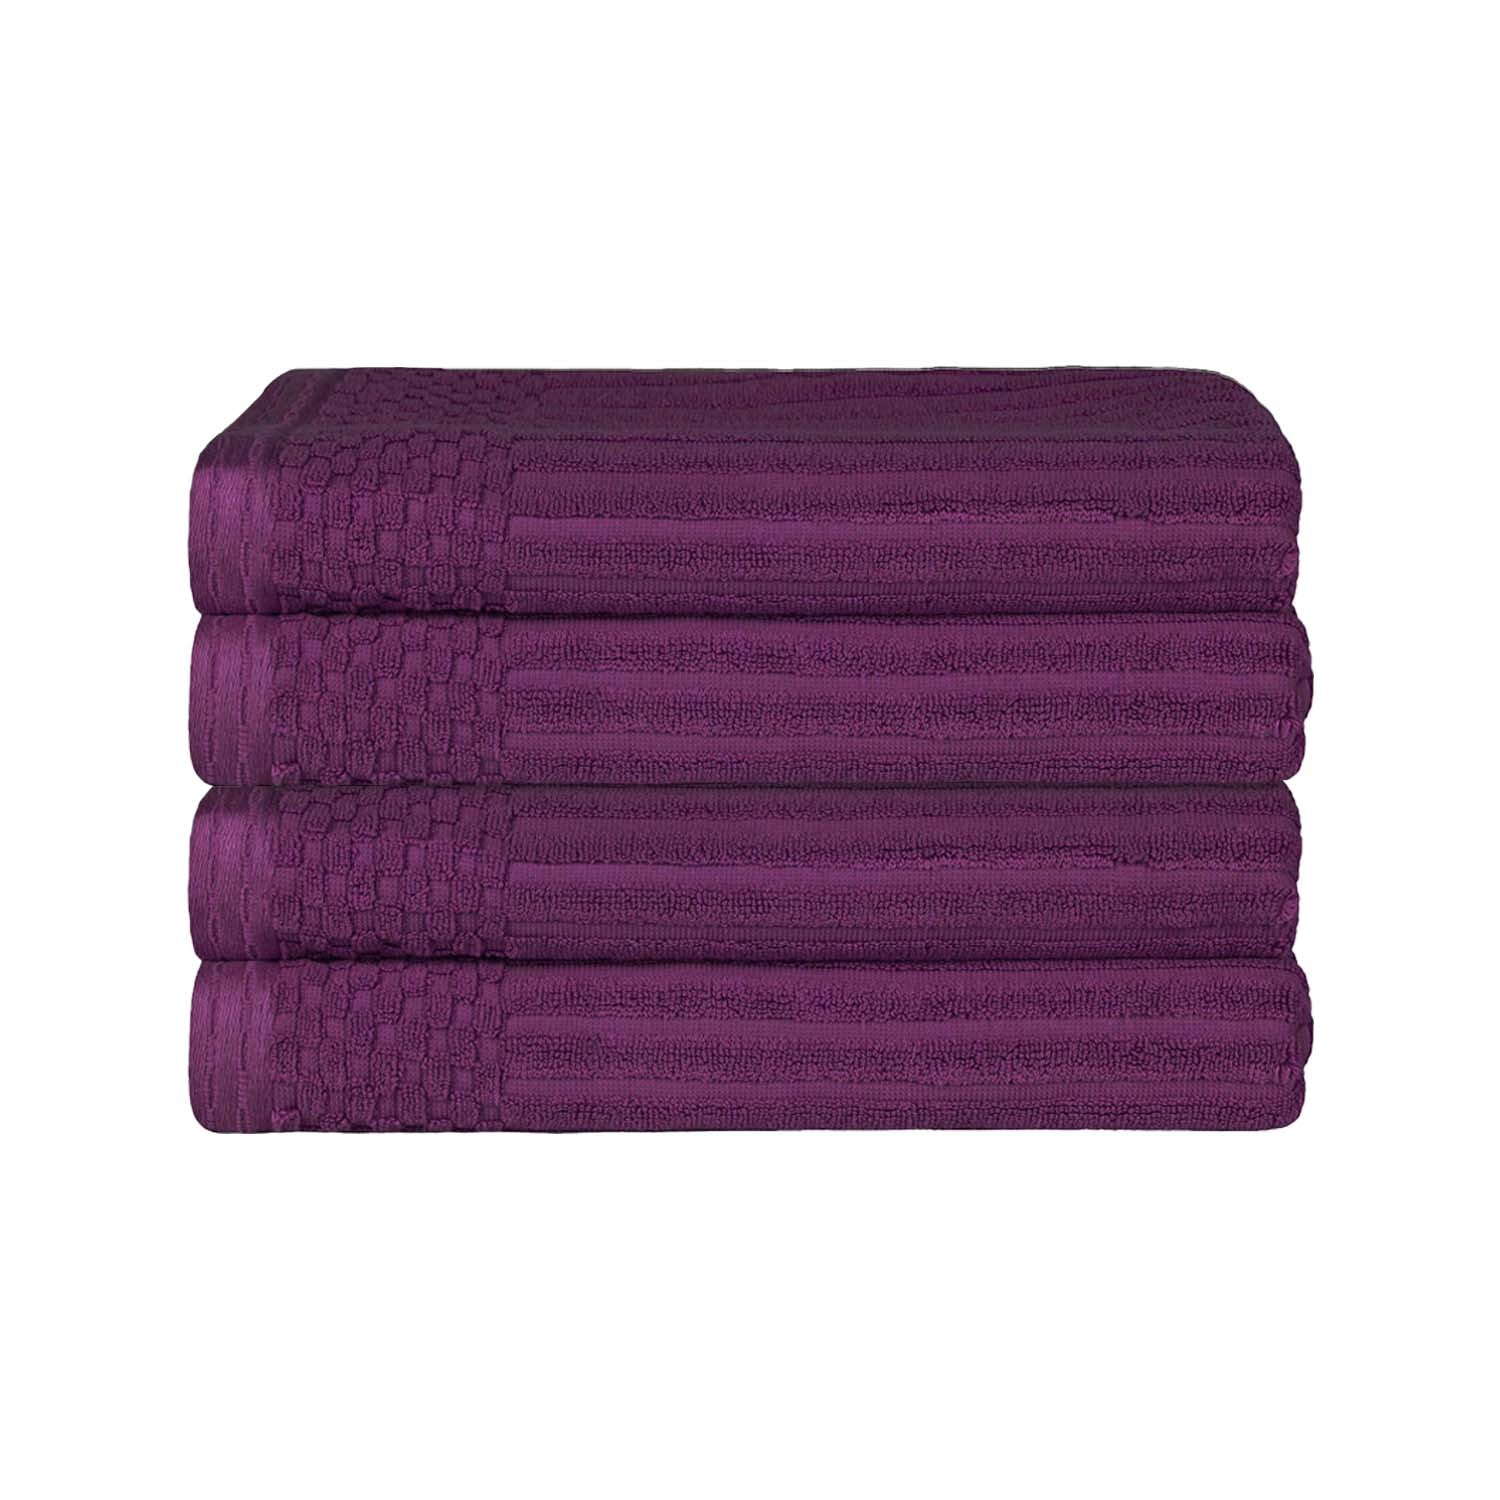 Superior Soho Ribbed Textured Cotton Ultra-Absorbent Bath Sheet & Bath Towel Set - Plum